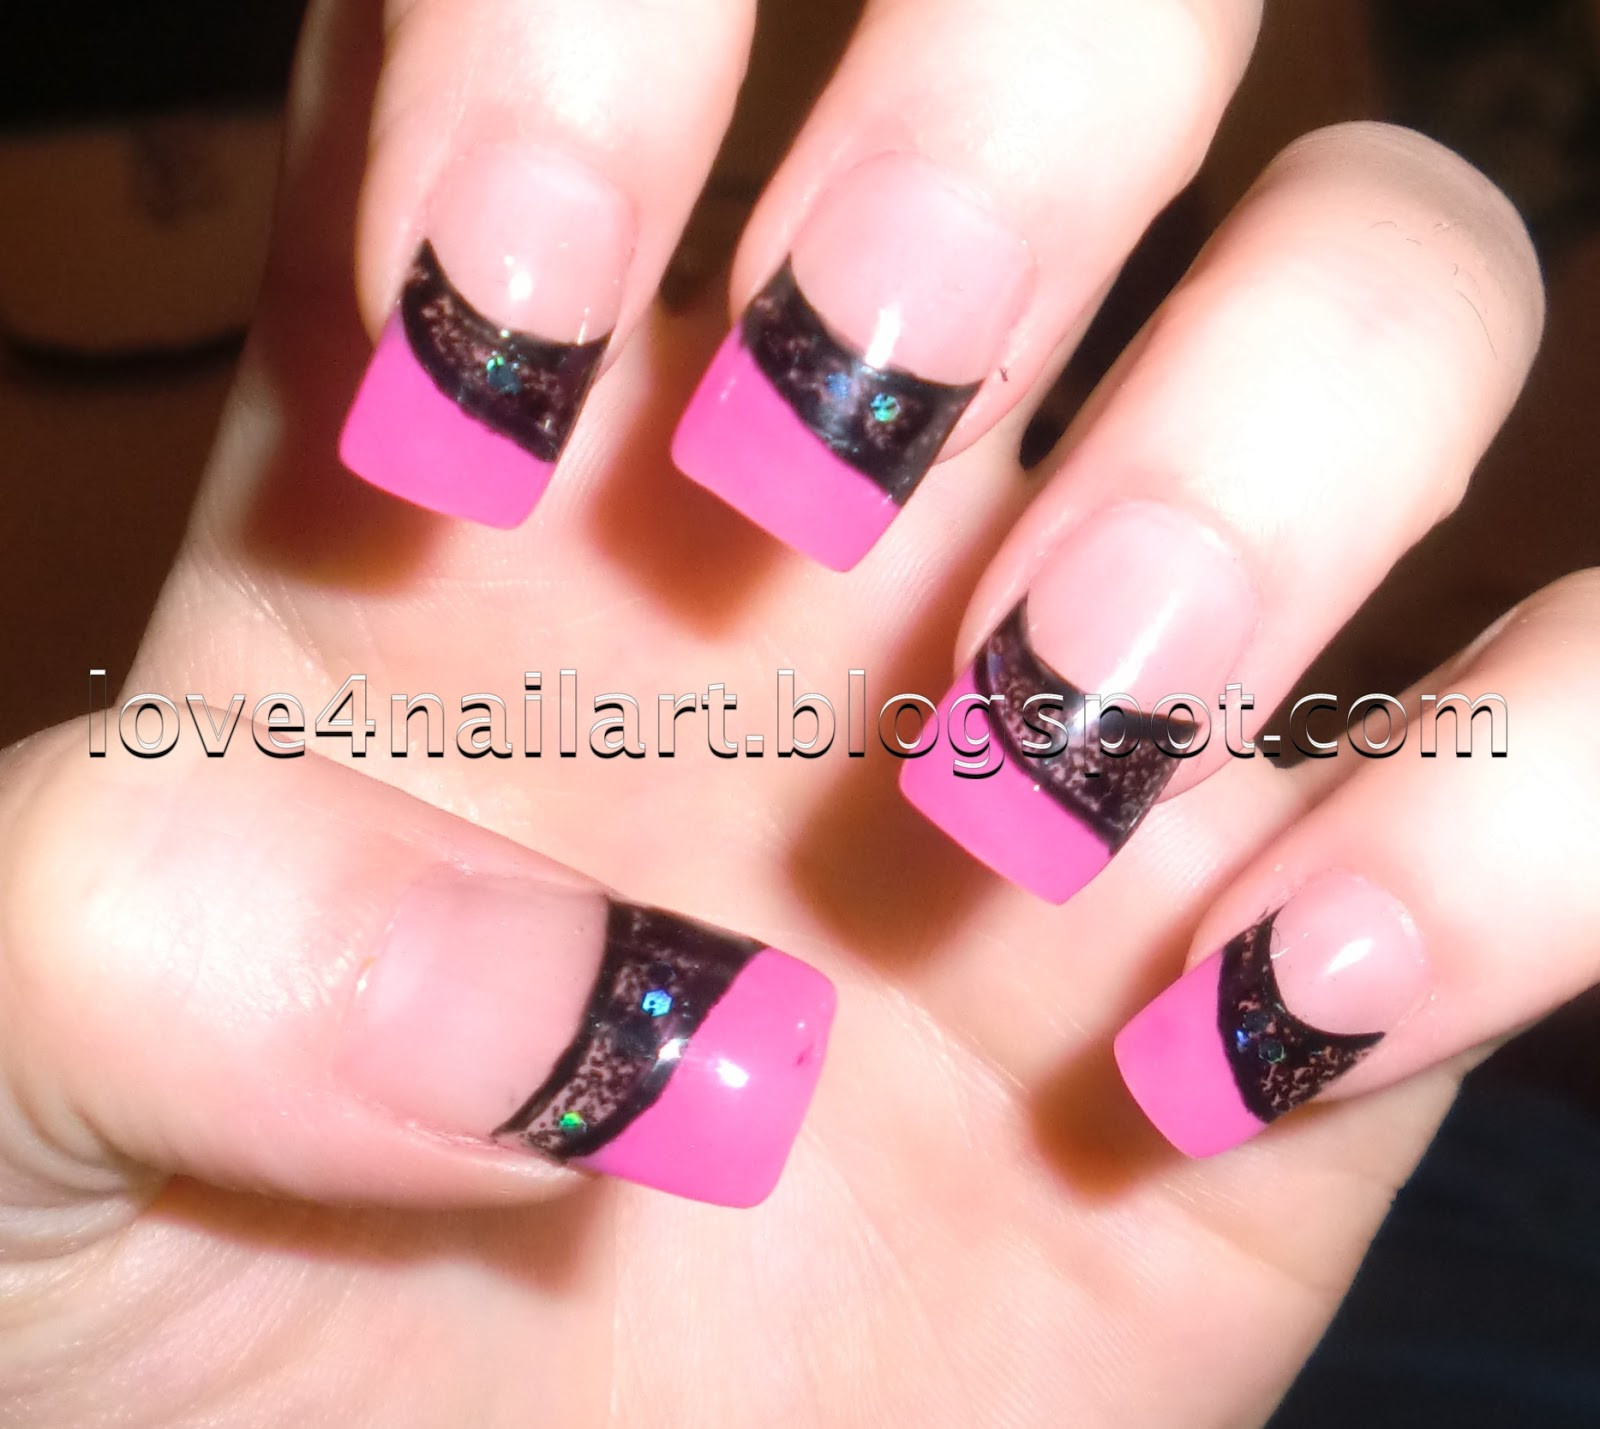 Colored Acrylic Nail Designs
 Love4NailArt Pink & Black Encapsulated Colored Acrylic Nails